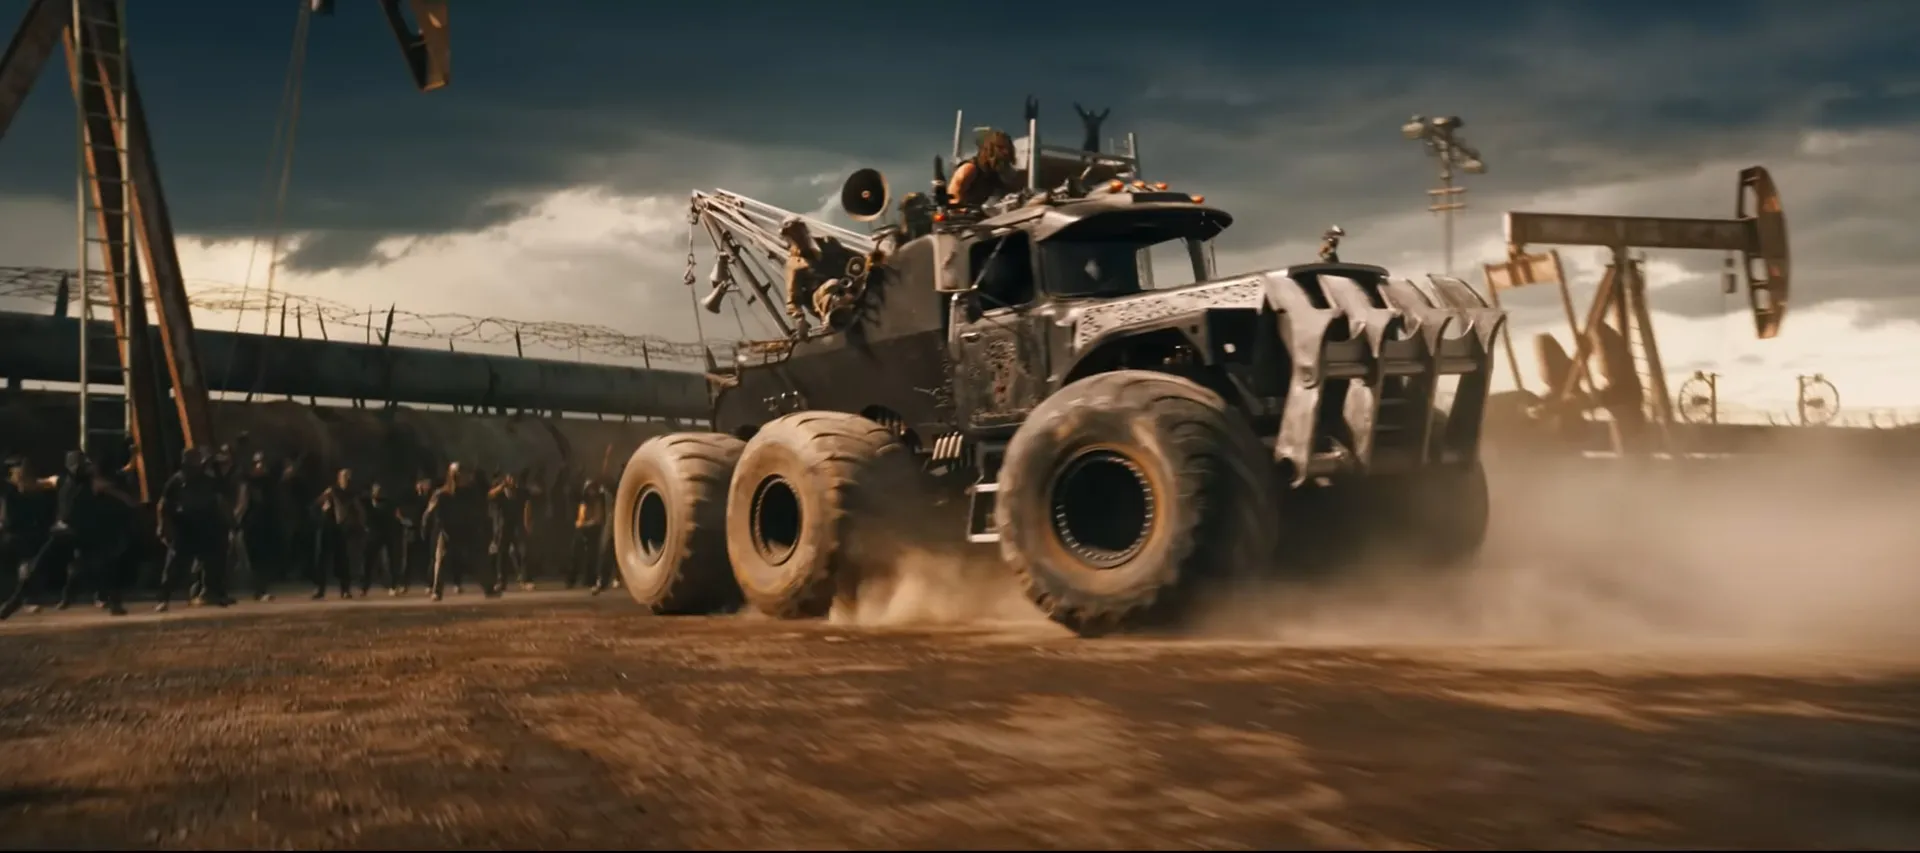 Meet some of the wild vehicles of “Furiosa: A Mad Max Saga” Auto Recent